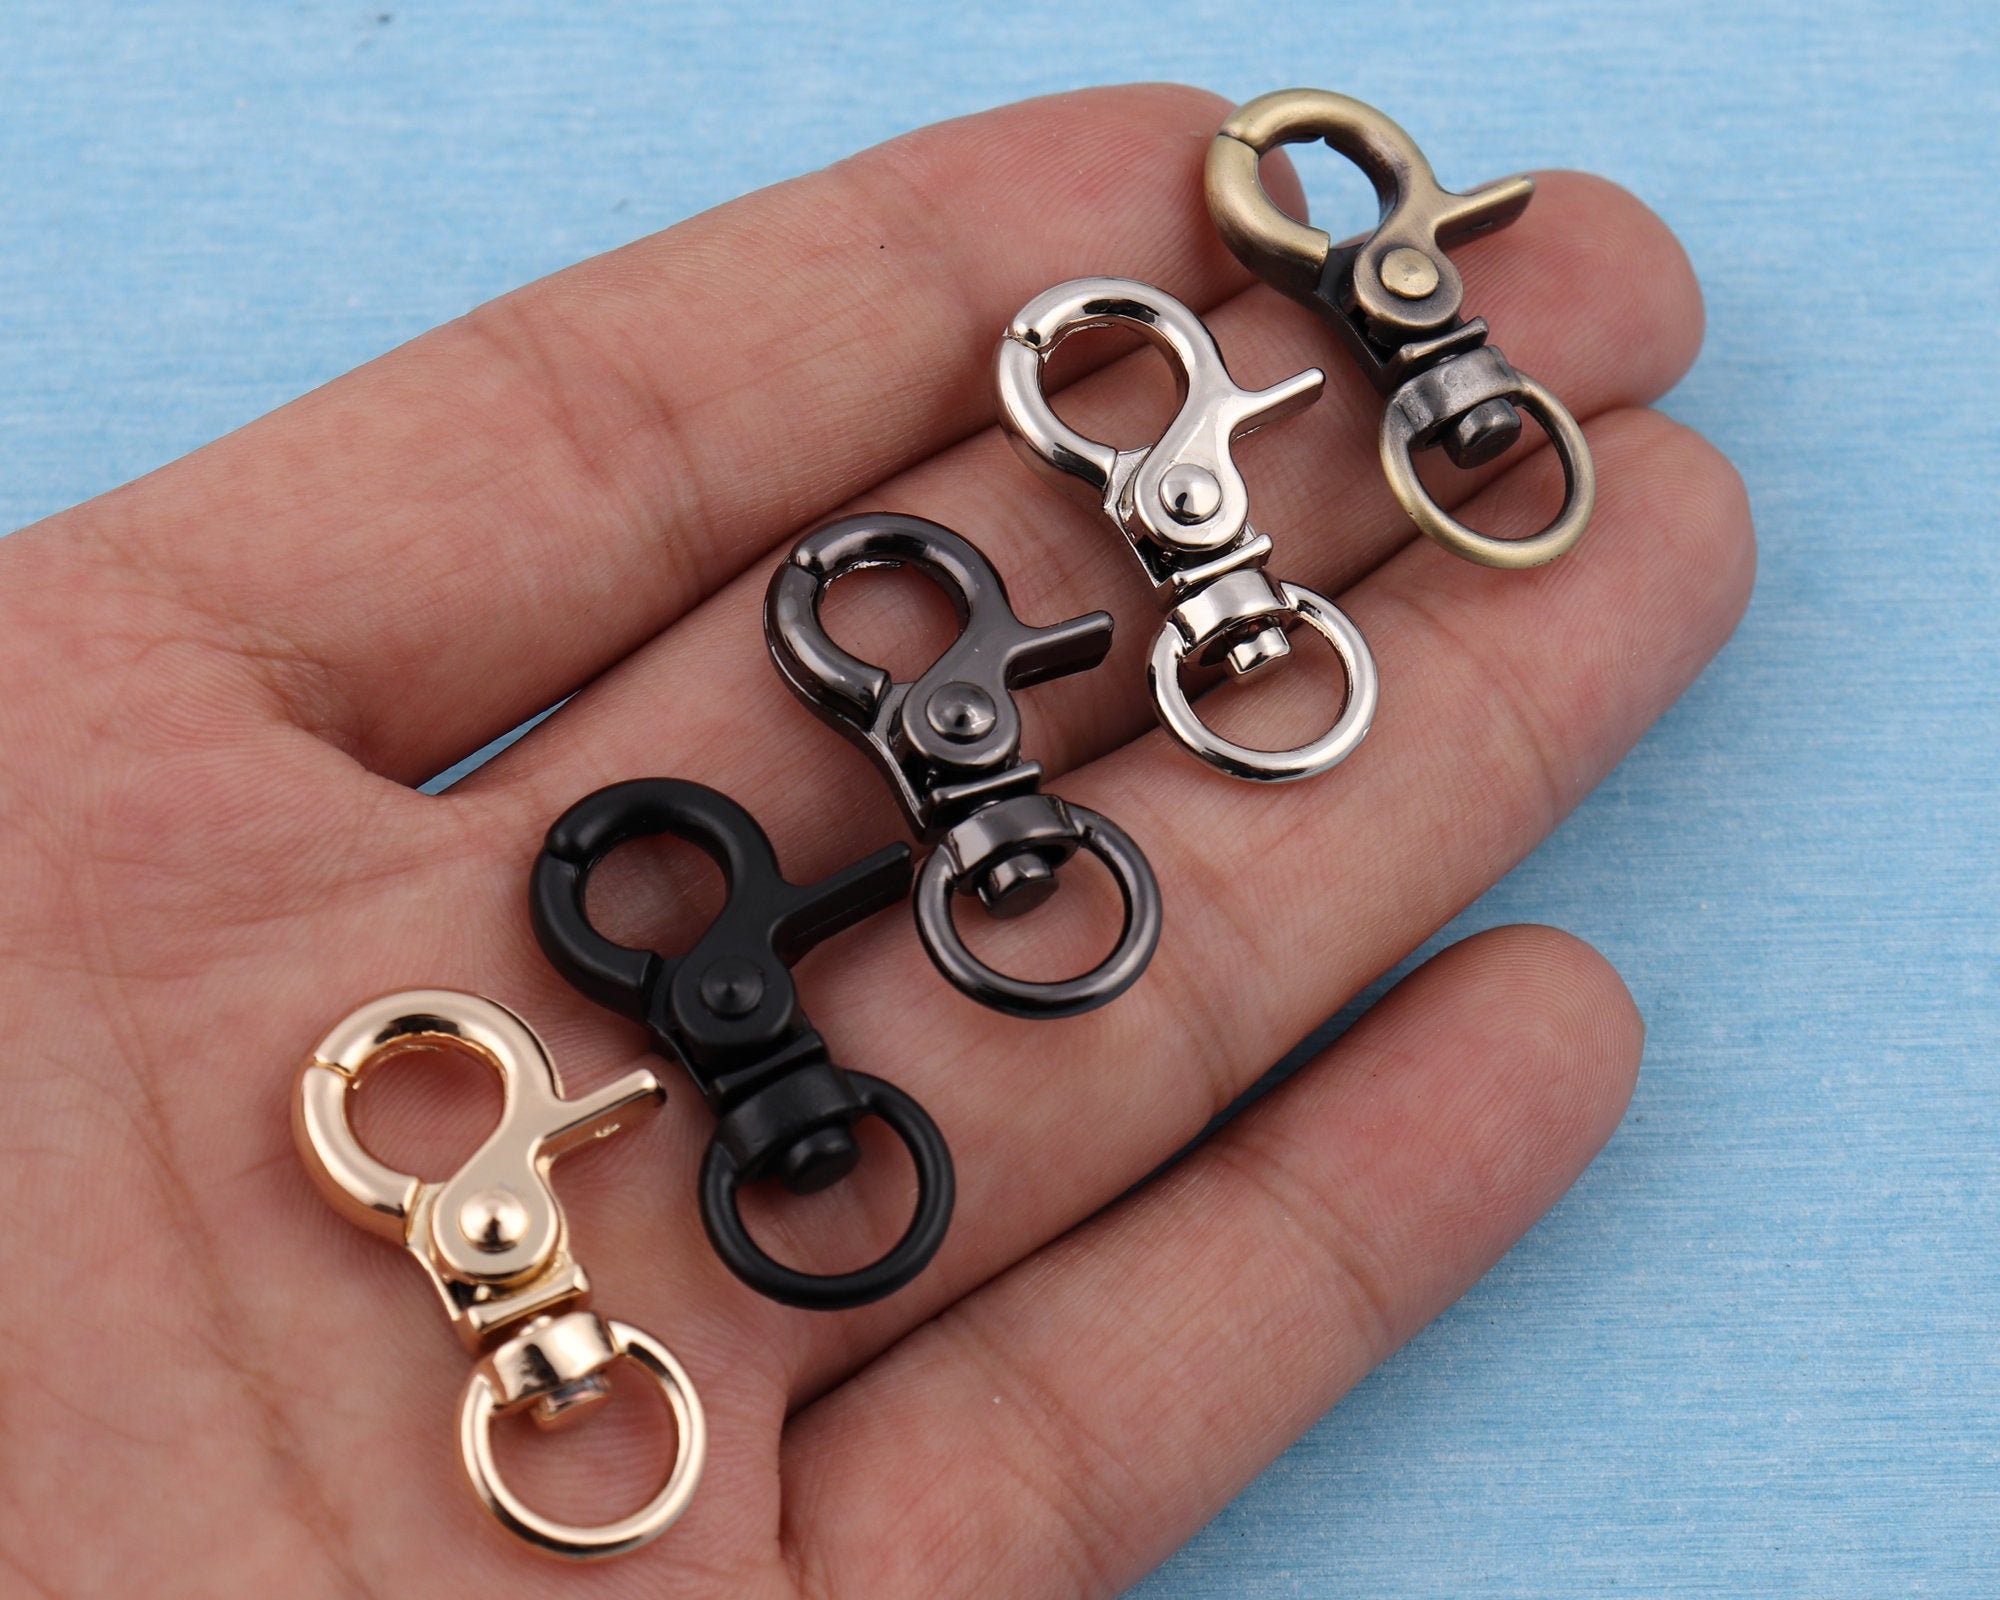  Semetall 10Pcs Black Swivel Snap Hooks Set,Mini Lanyard Snap  Hooks with Key Chain Rings for Lanyard Clip,Keychains Jewelry DIY Crafts